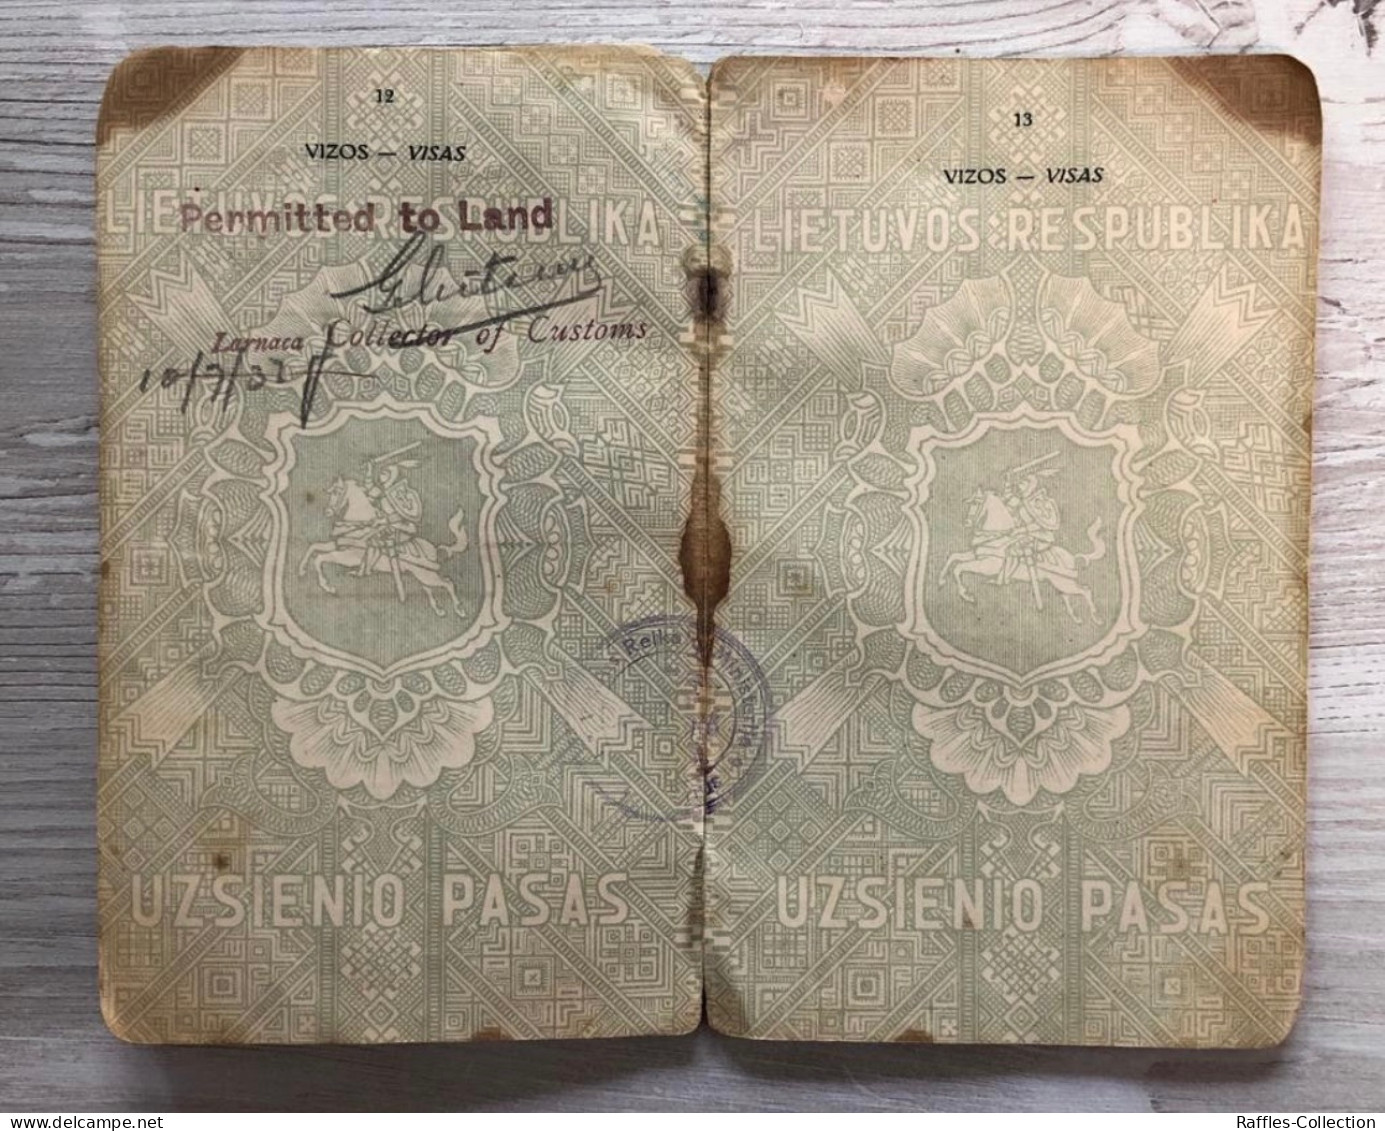 Lithuania 1931 passport for a Jewish lady issued in Kovno - Palestine visa passeport reisepass pasaporte passaporto